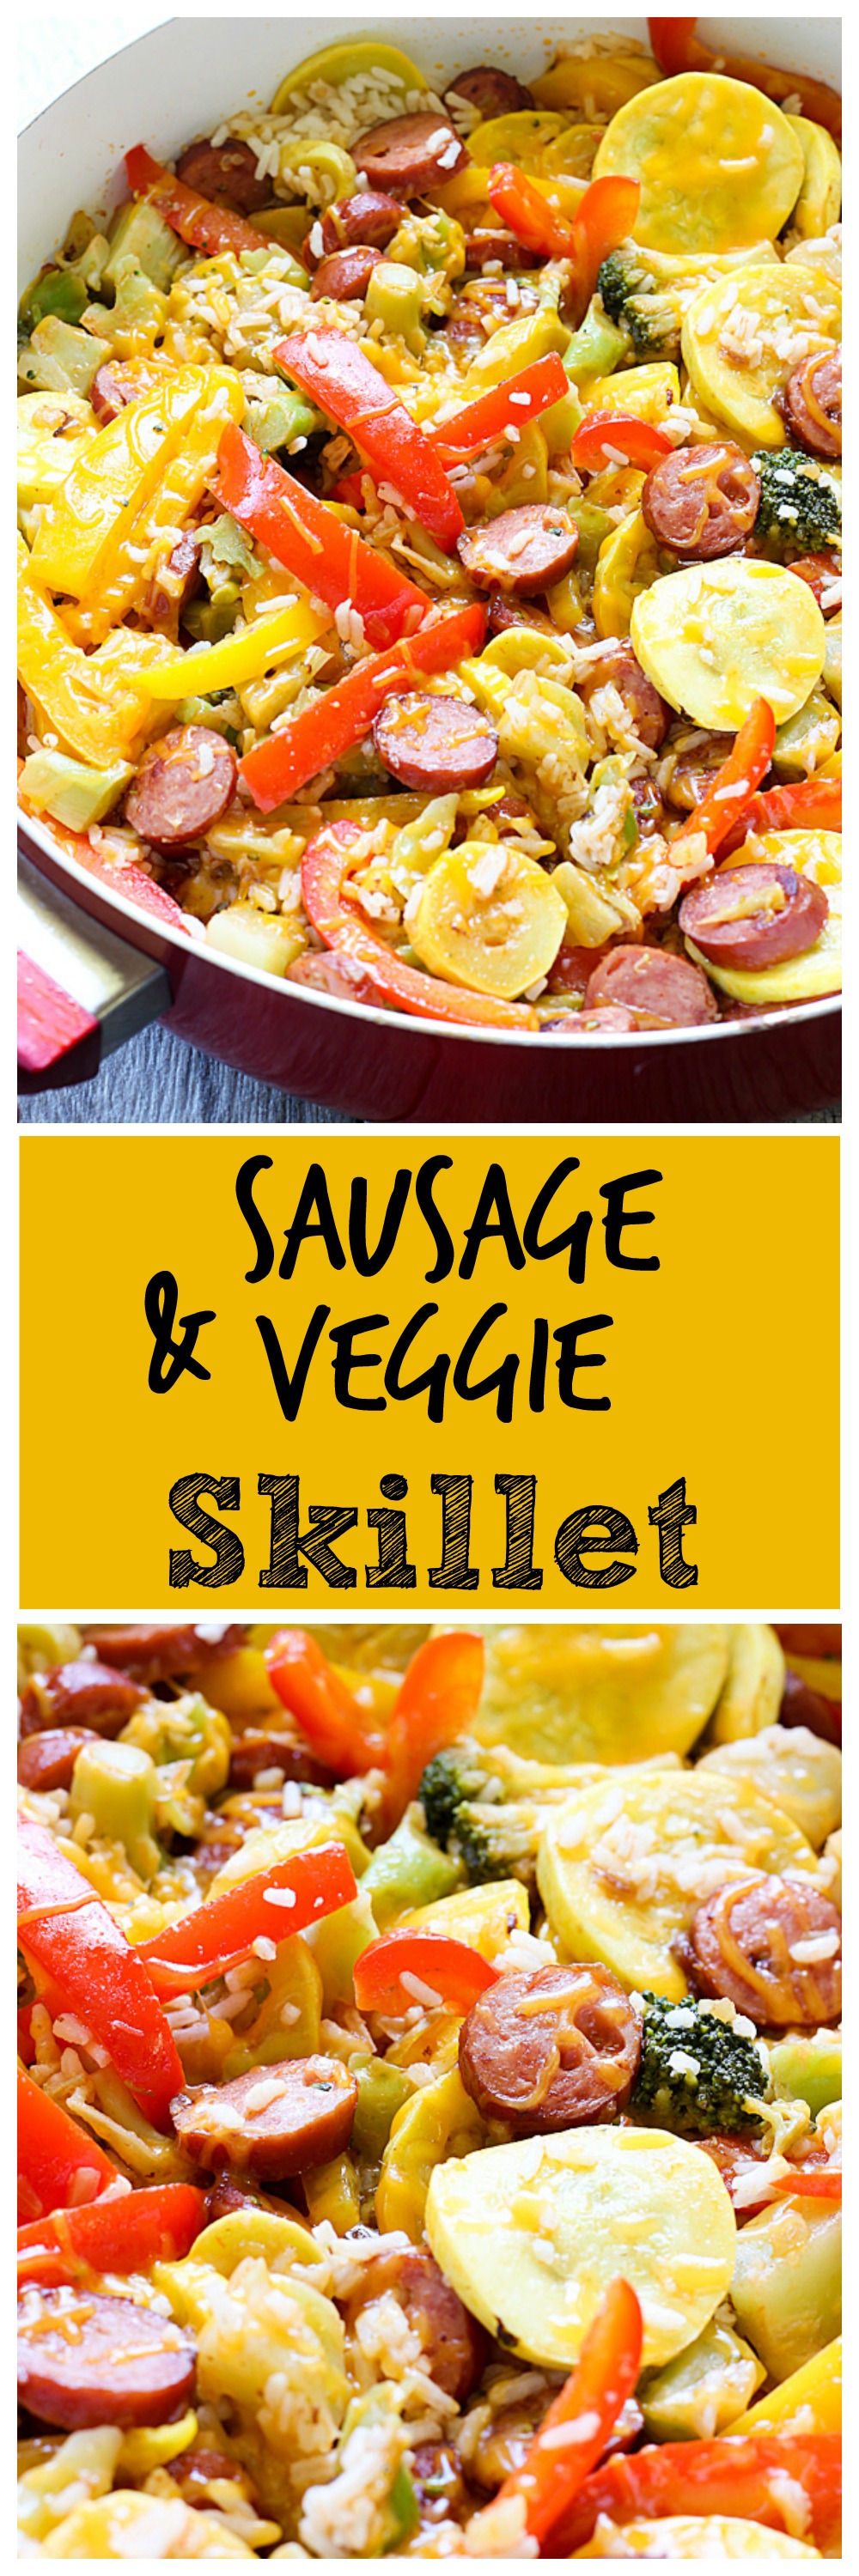 Sausage and Veggie Skillet